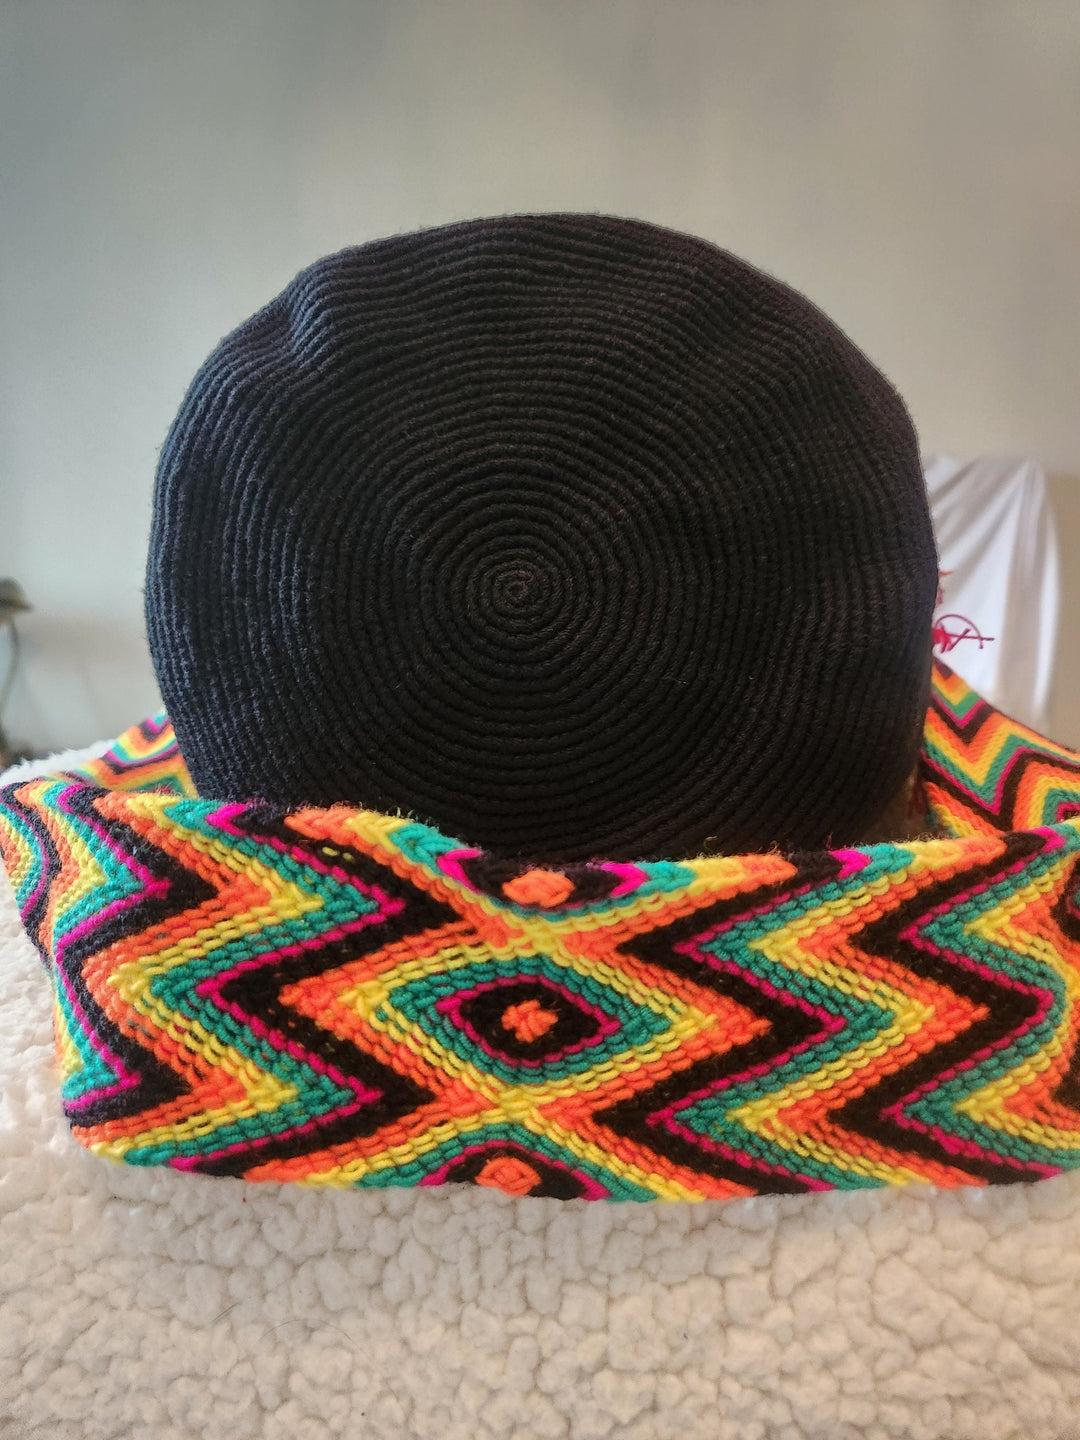 Black crochet bag bottom view 2